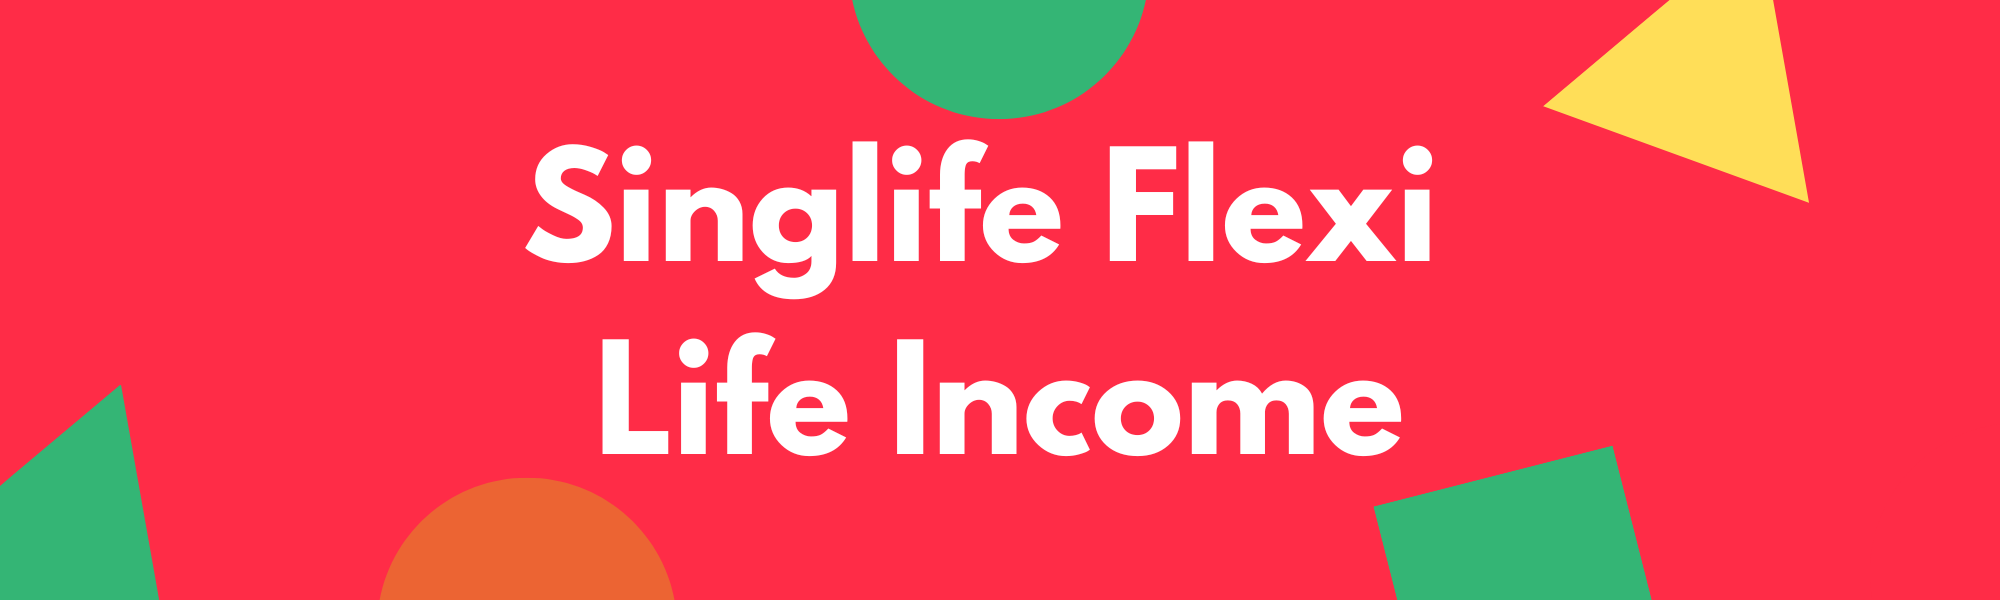 Singlife Flexi Life Income - Best SRS Endowment Plan